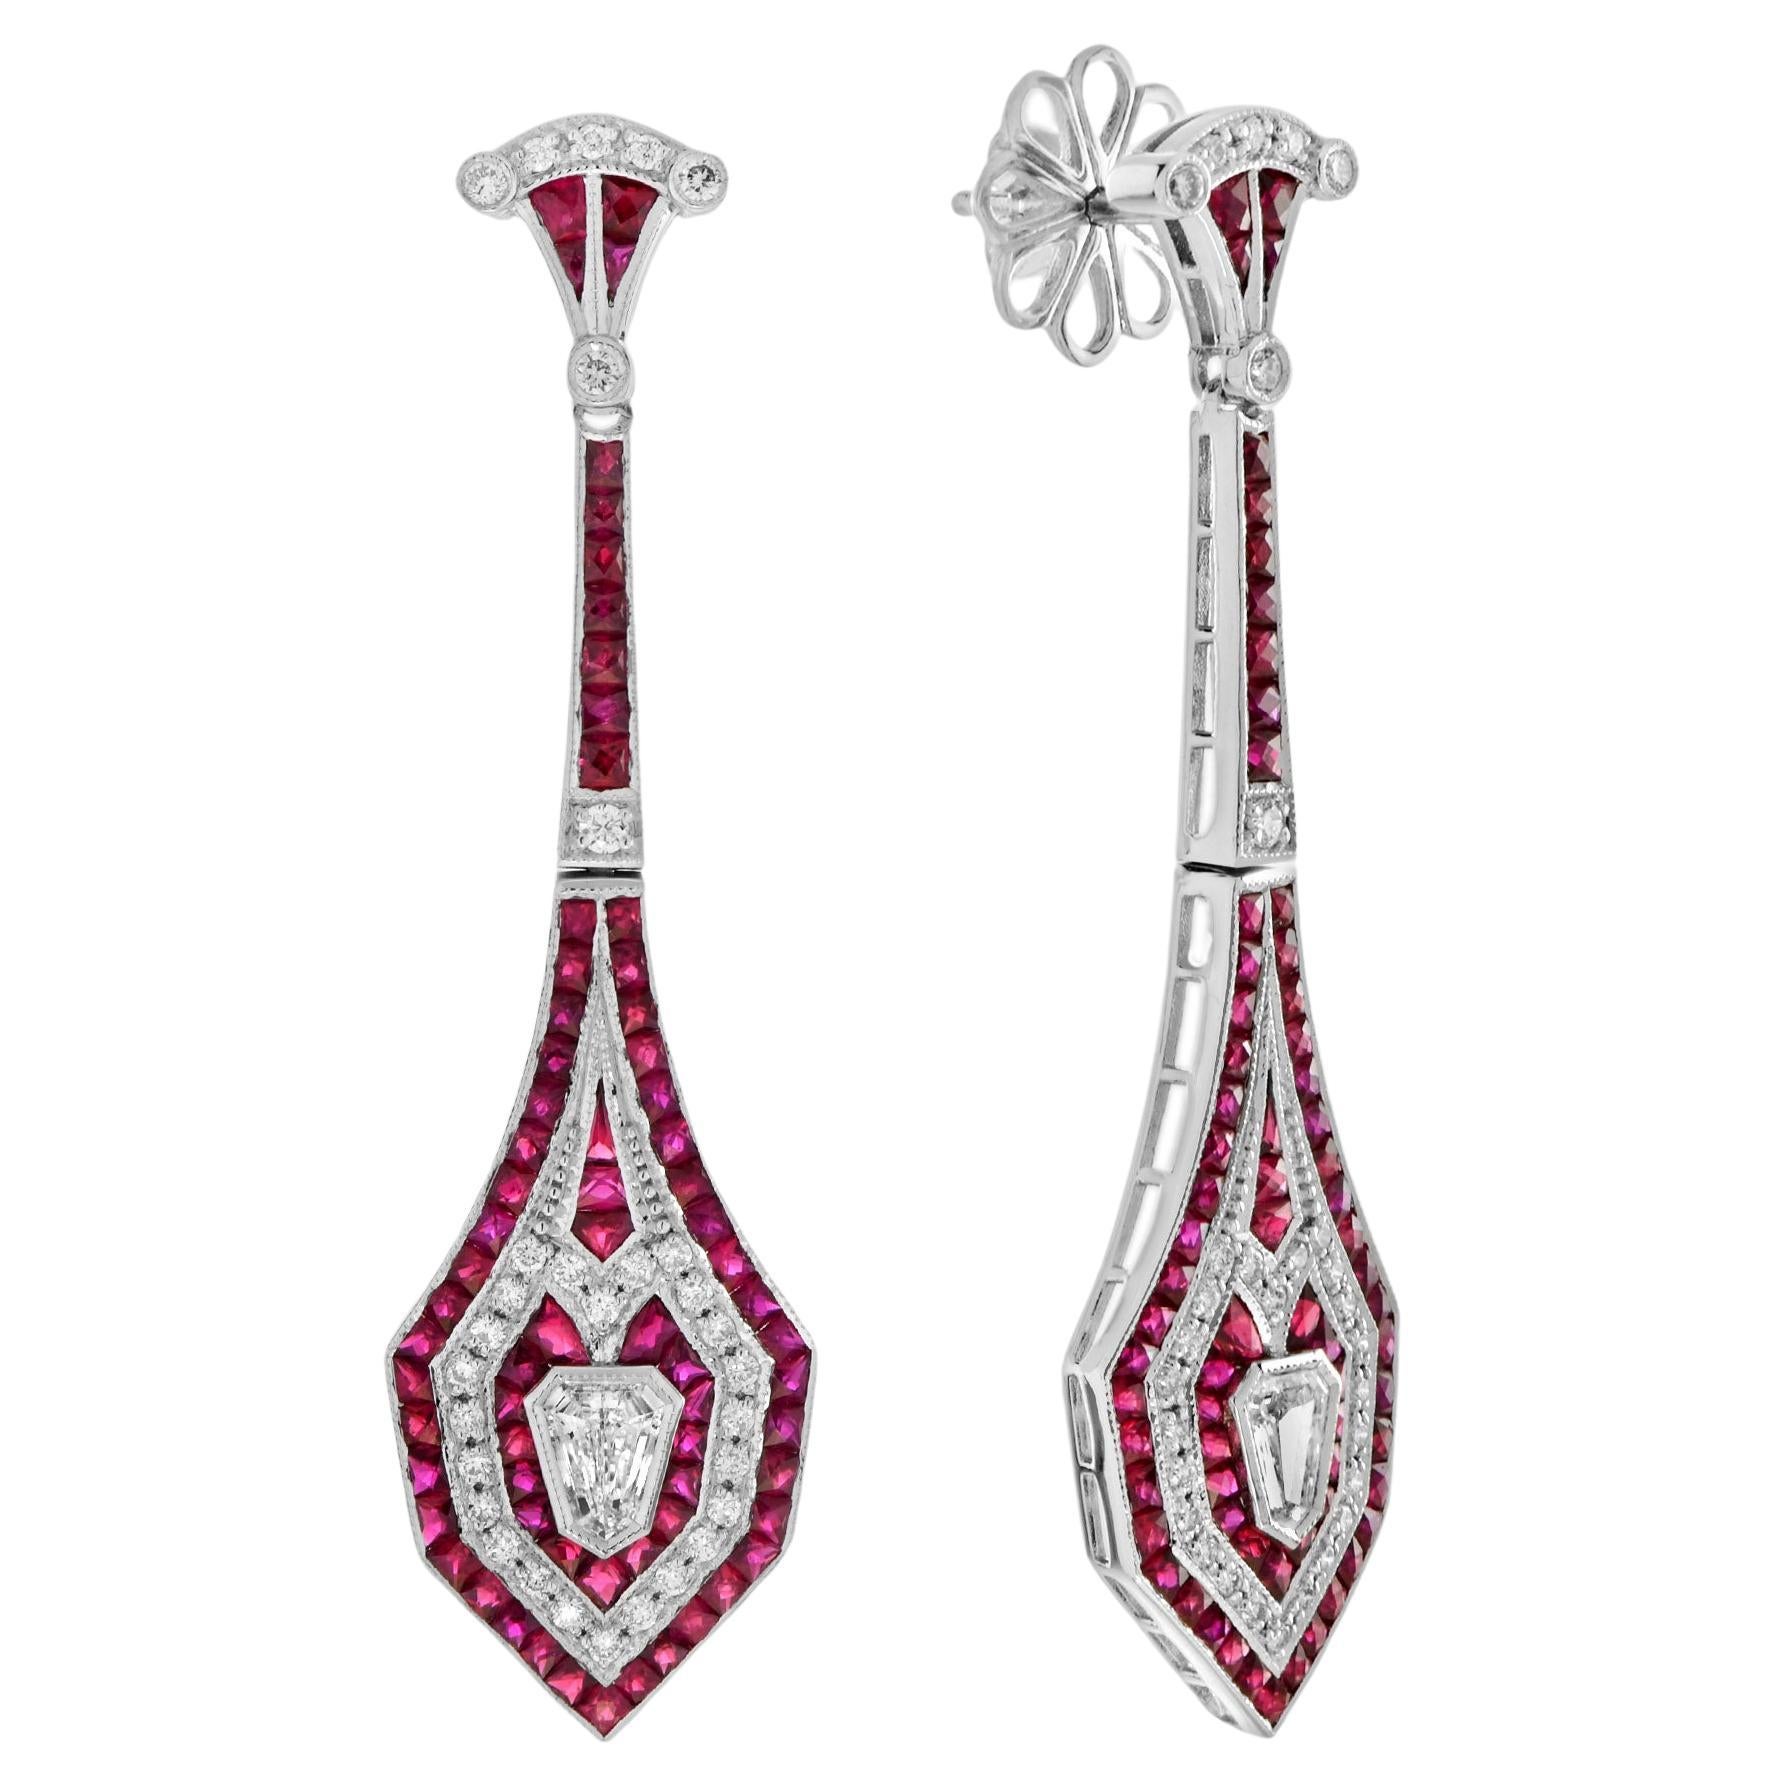 Bullet Shape Diamond and Ruby Art Deco Style Drop Earrings in 18K White Gold